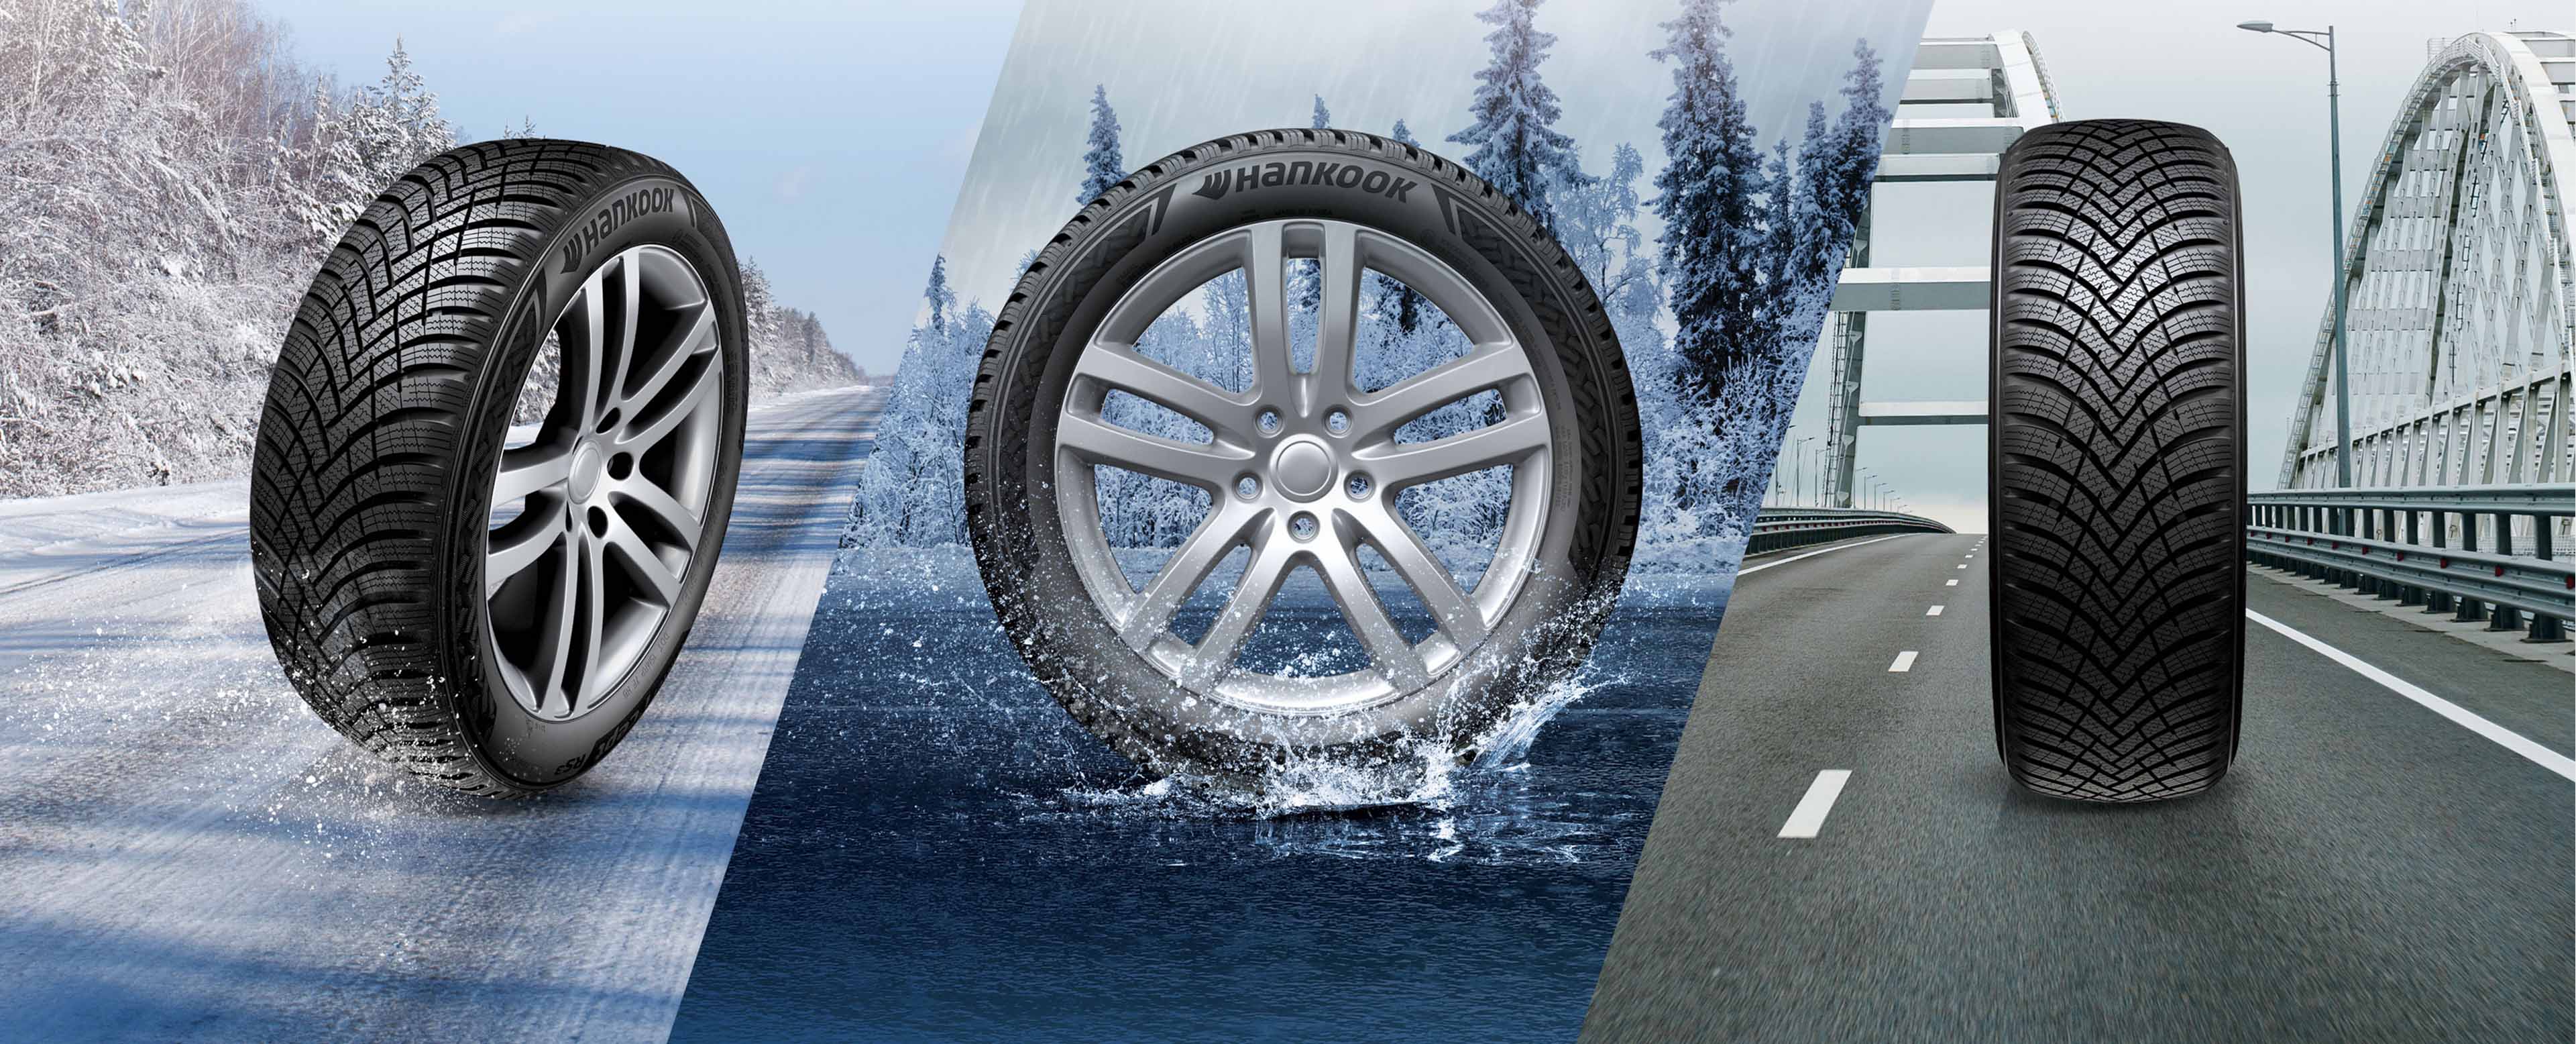 Winter i cept RS3 W462 - Winter i cept | Hankook Tire UK